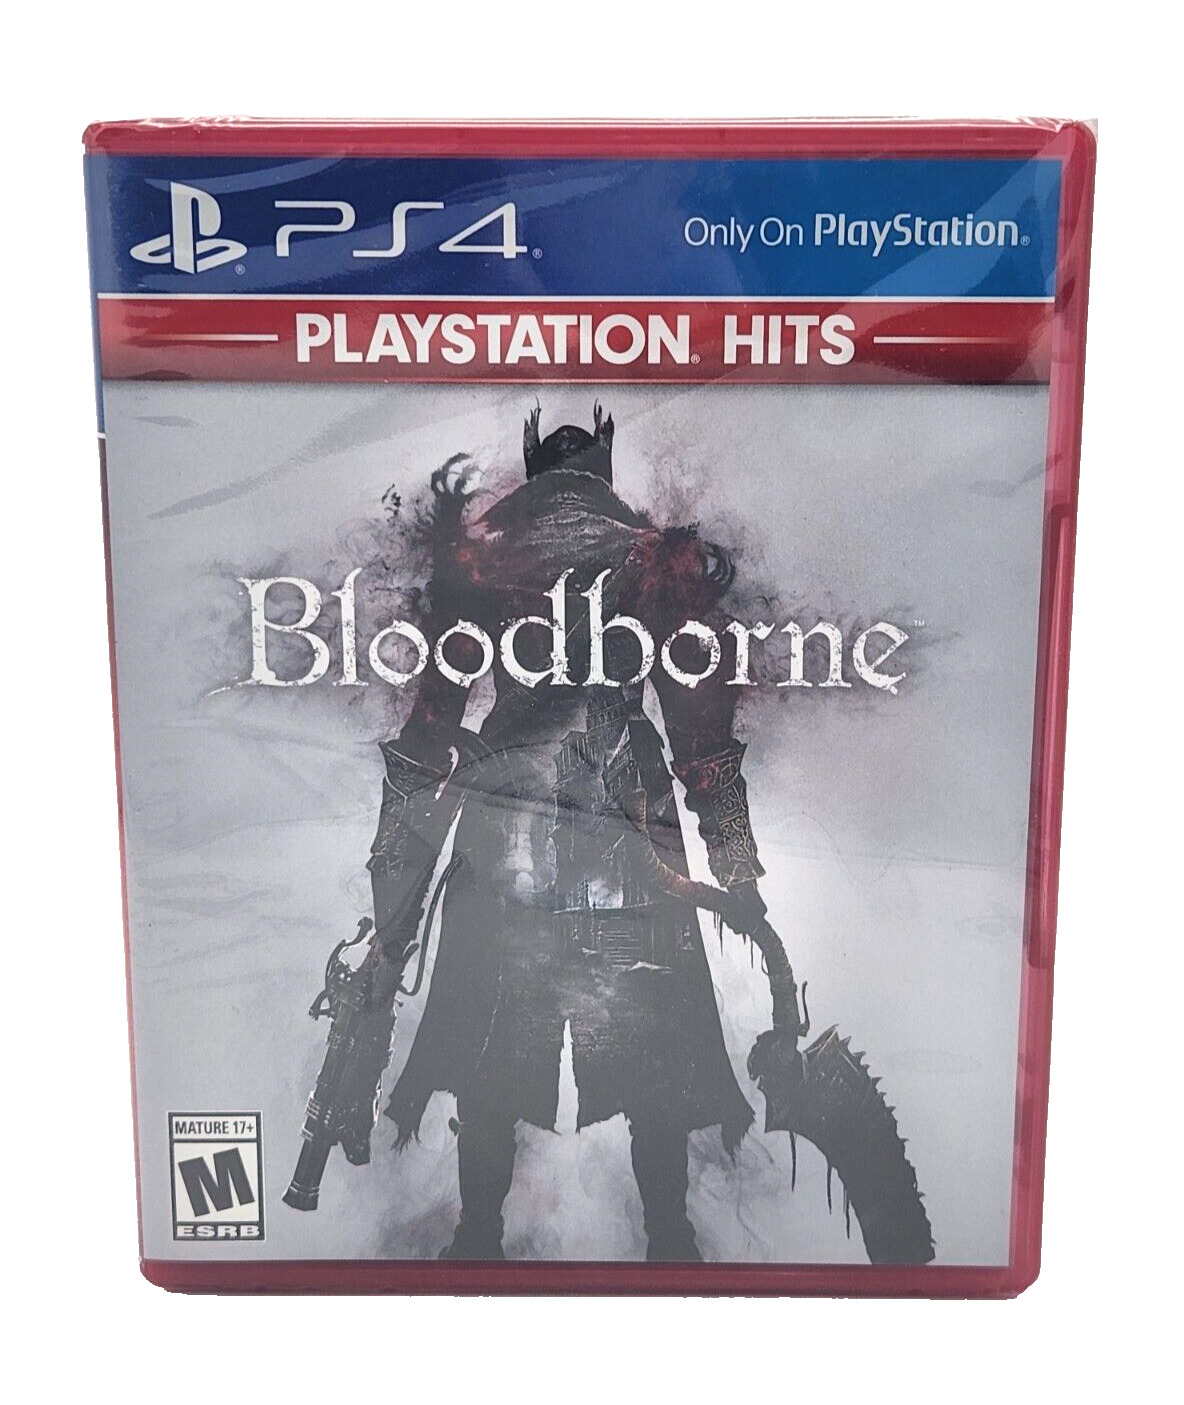 Astonishing Bloodborne – Greatest Hits Edition – Sony PlayStation 4 PS4 – New Sealed US Ver. on eBay